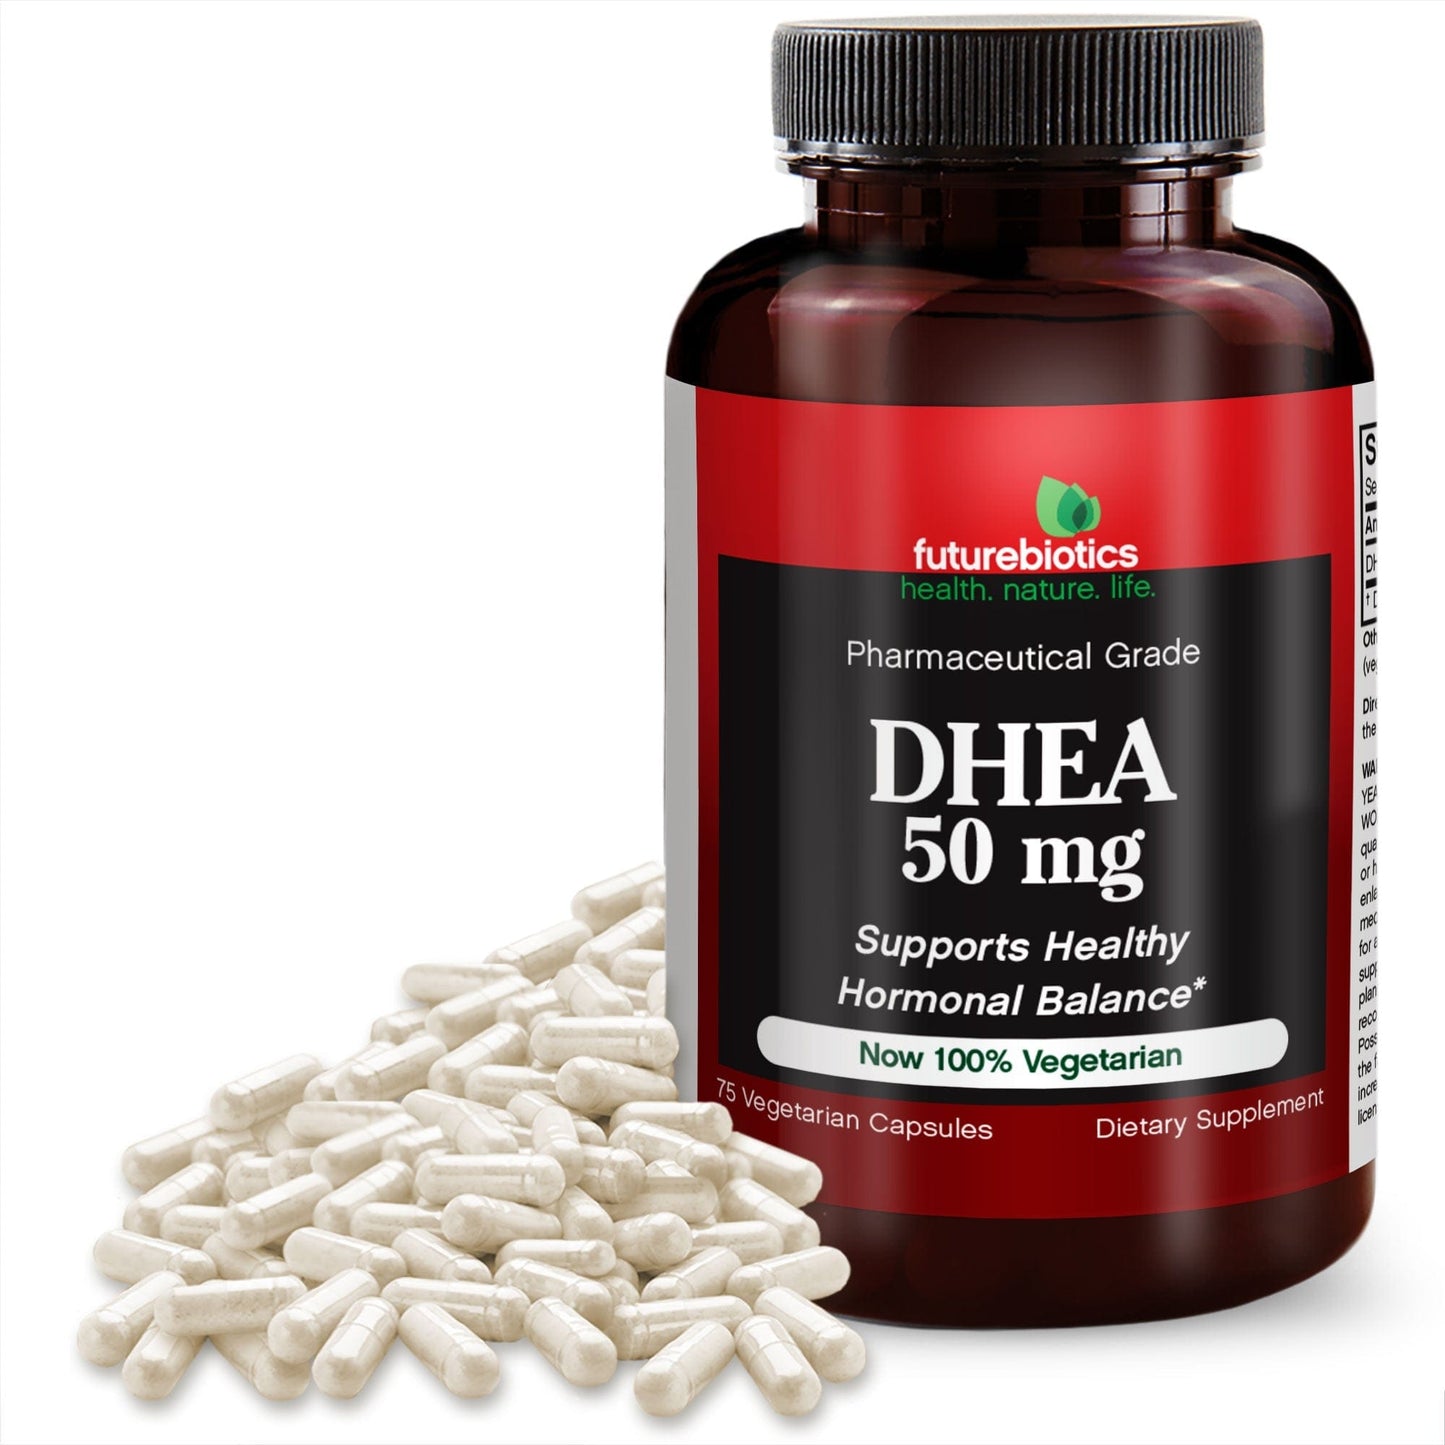 Futurebiotics DHEA Supplements 50 mg, 75 Capsules